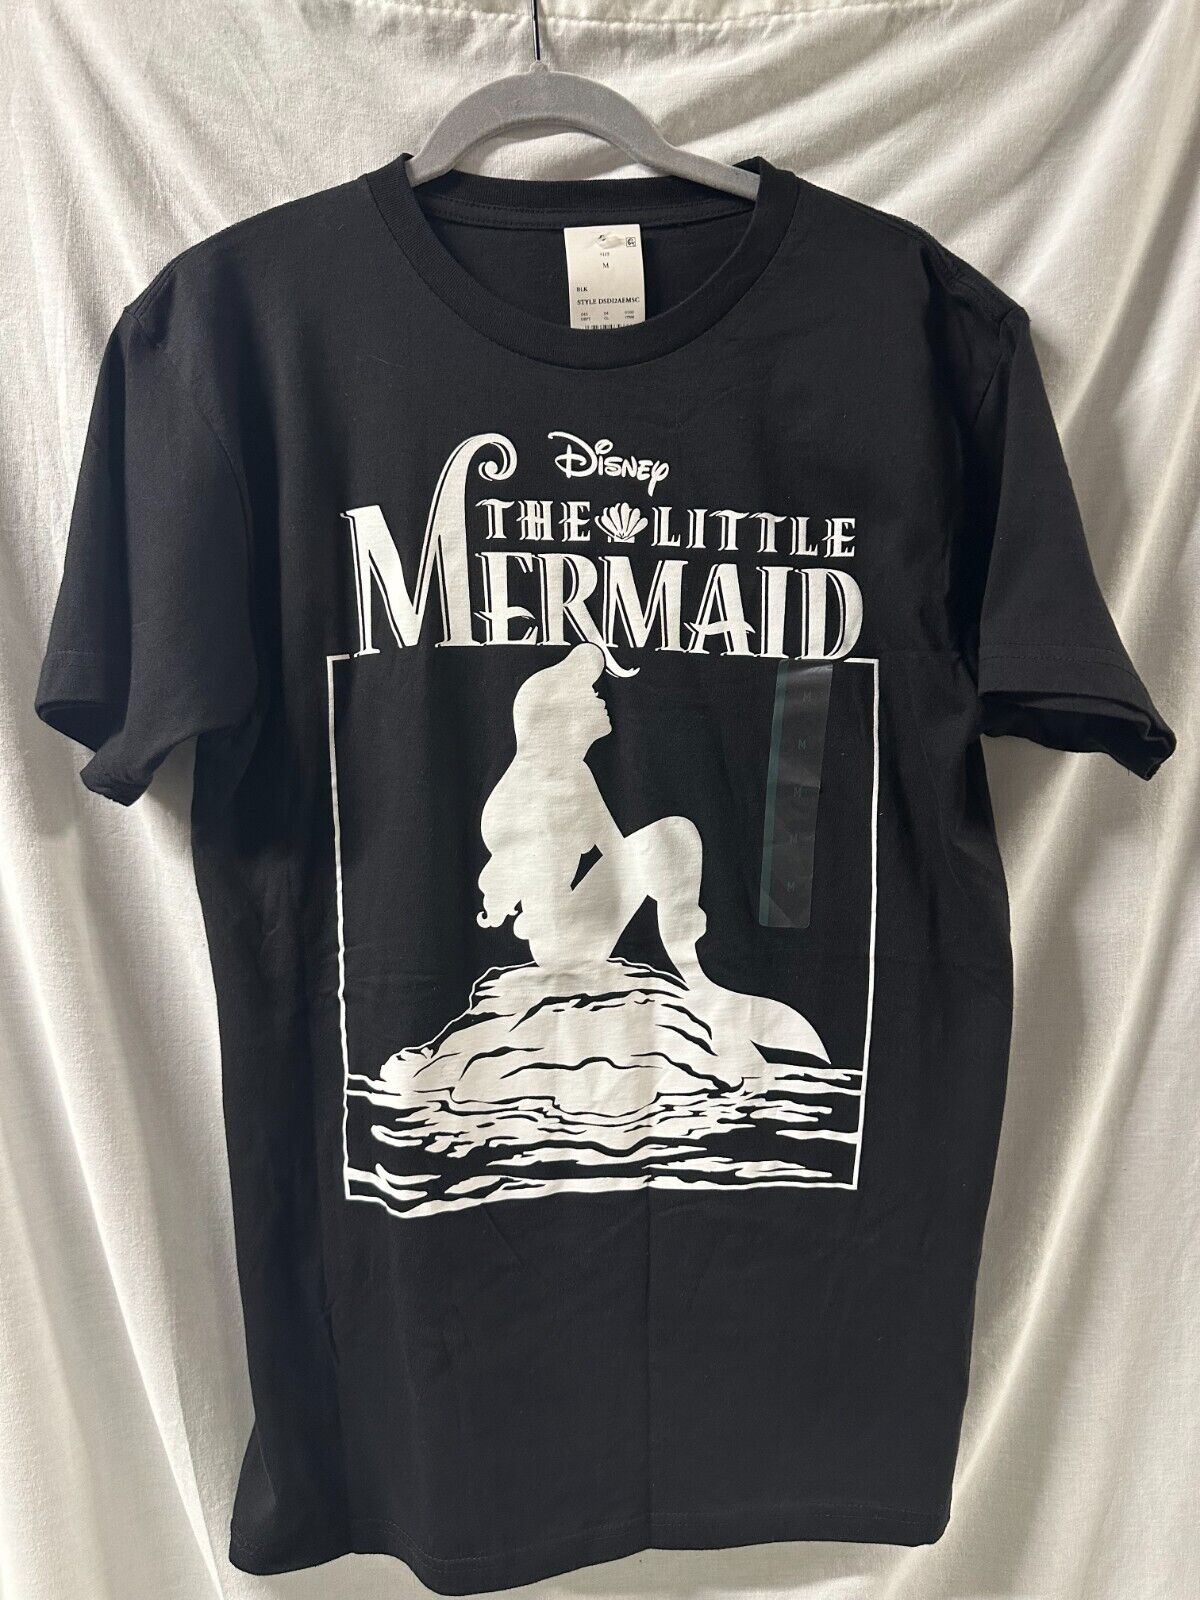 Disney’s The Little Mermaid Black White Monochrome Tee Shirt Size S Disney Store